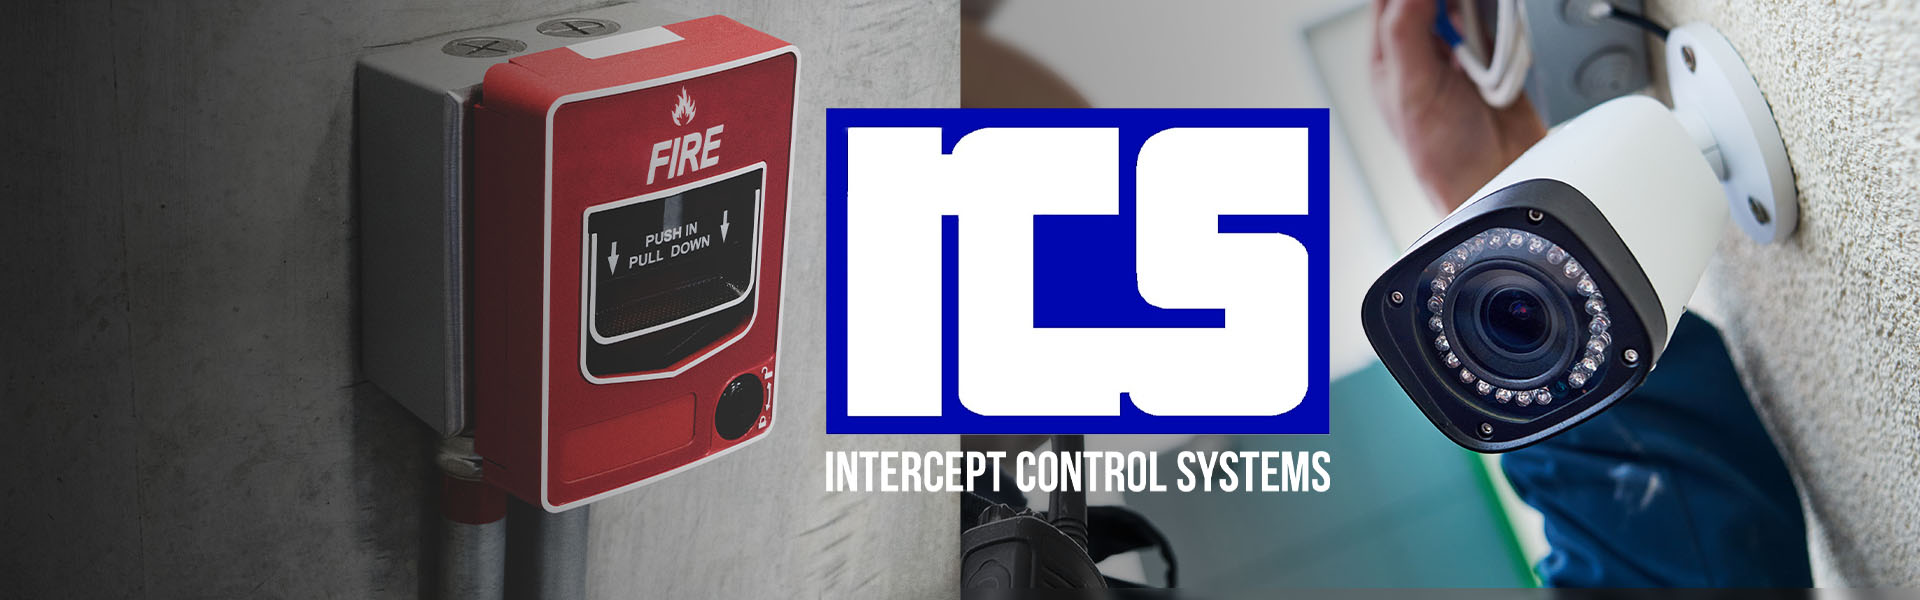 Intercept Control Systems